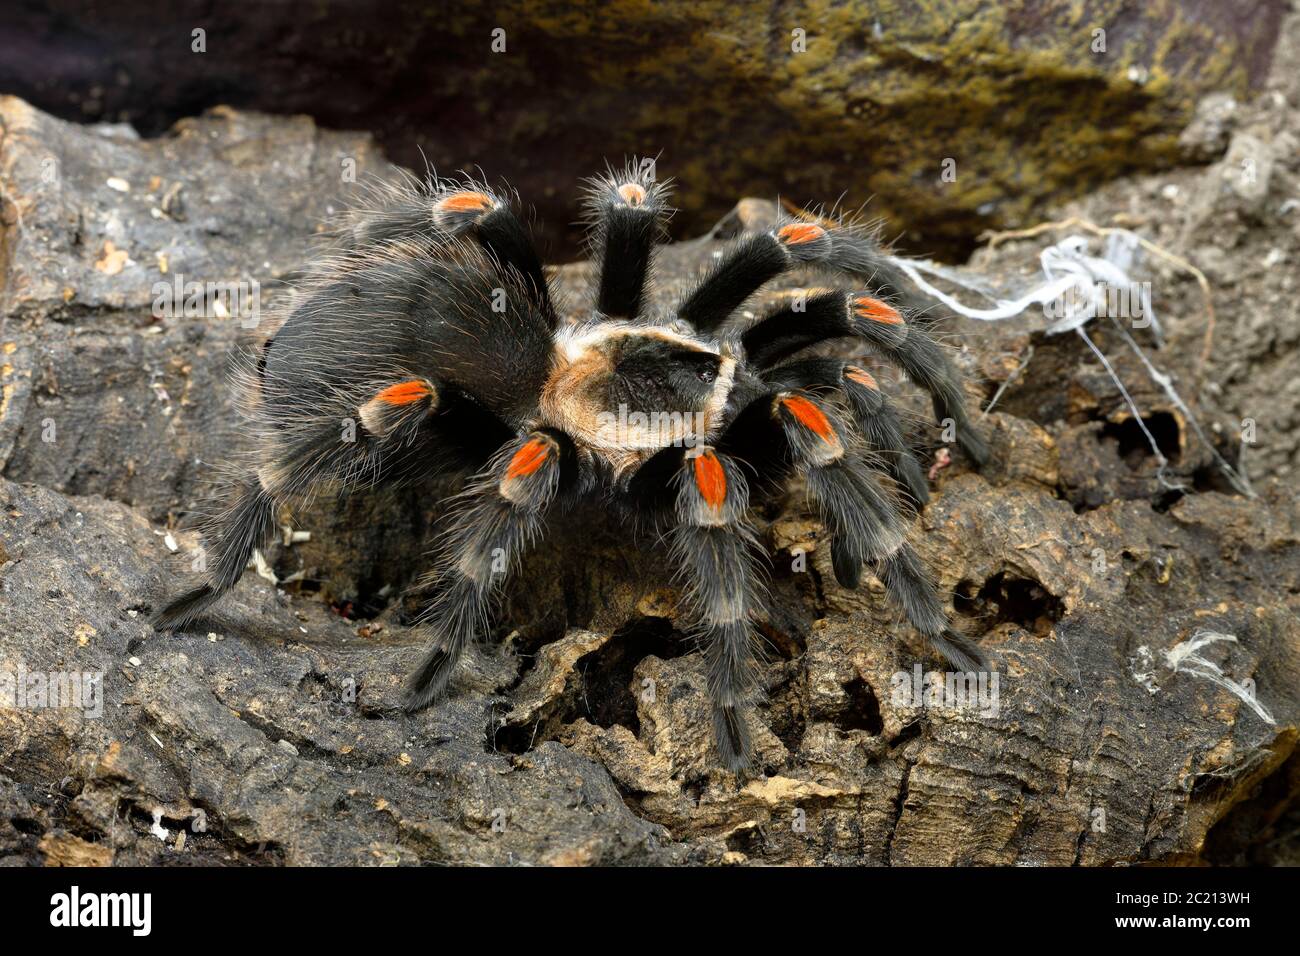 Red-knee tarantula Stock Photo